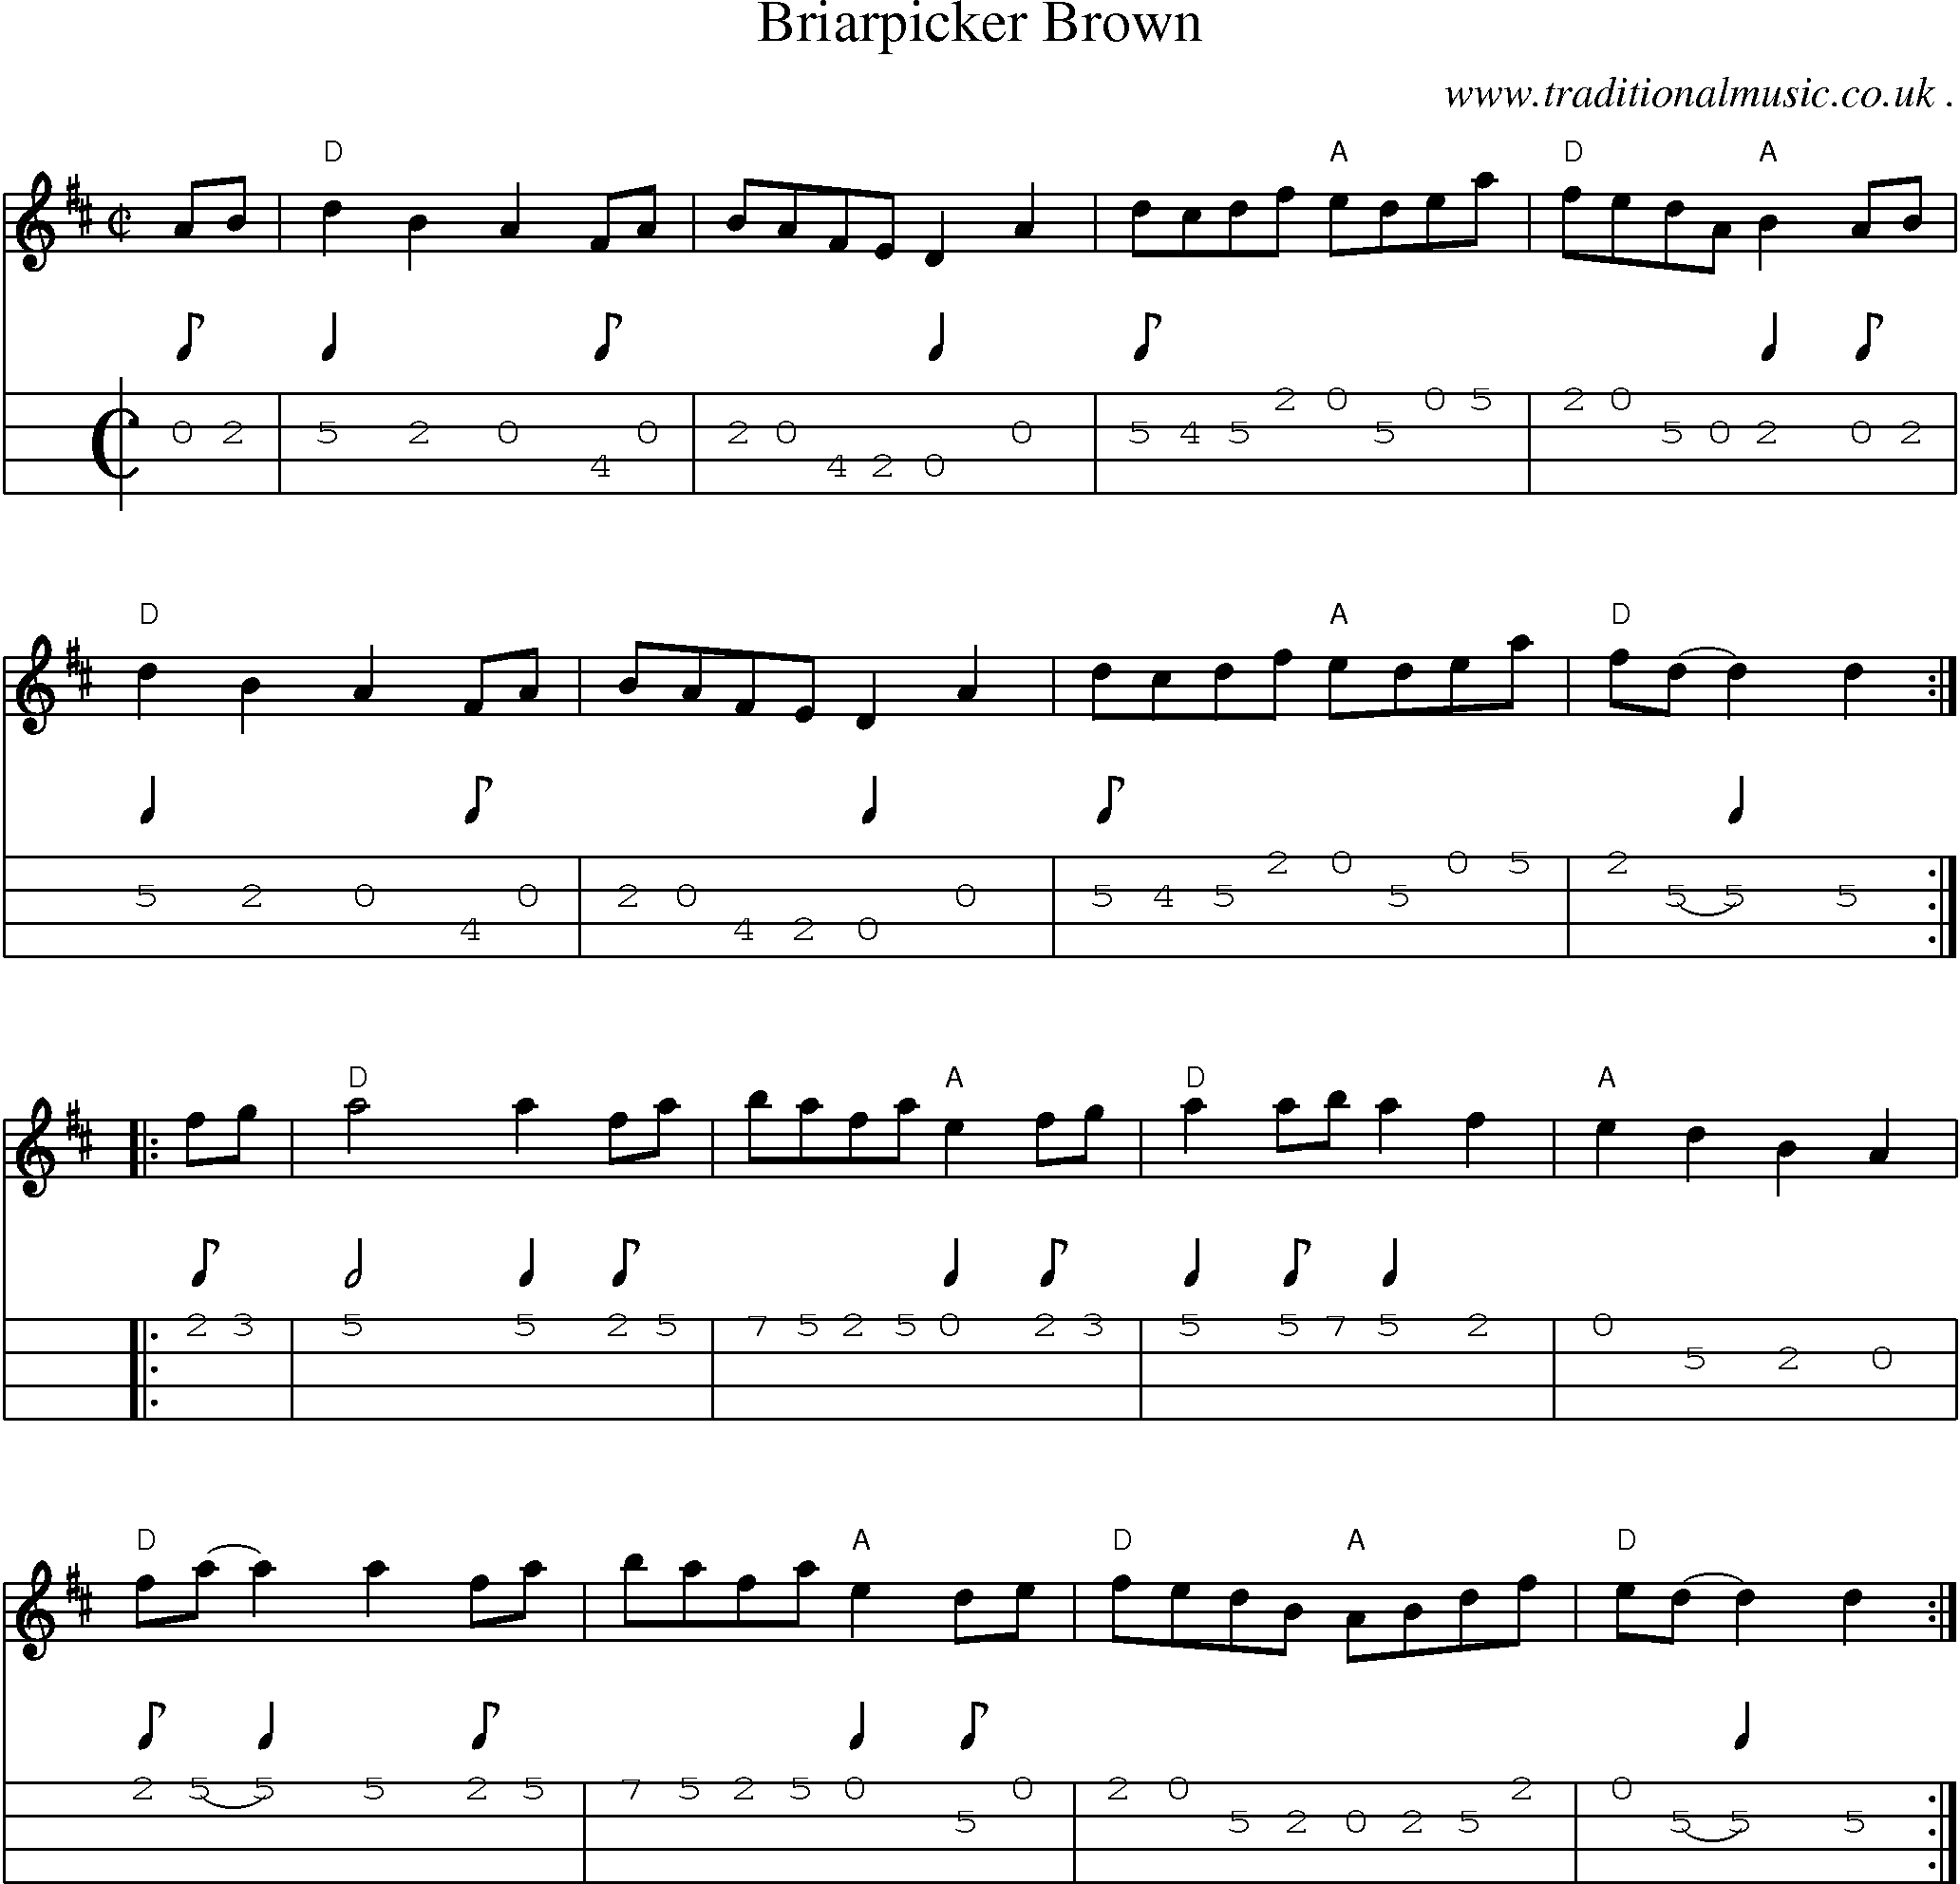 Music Score and Mandolin Tabs for Briarpicker Brown